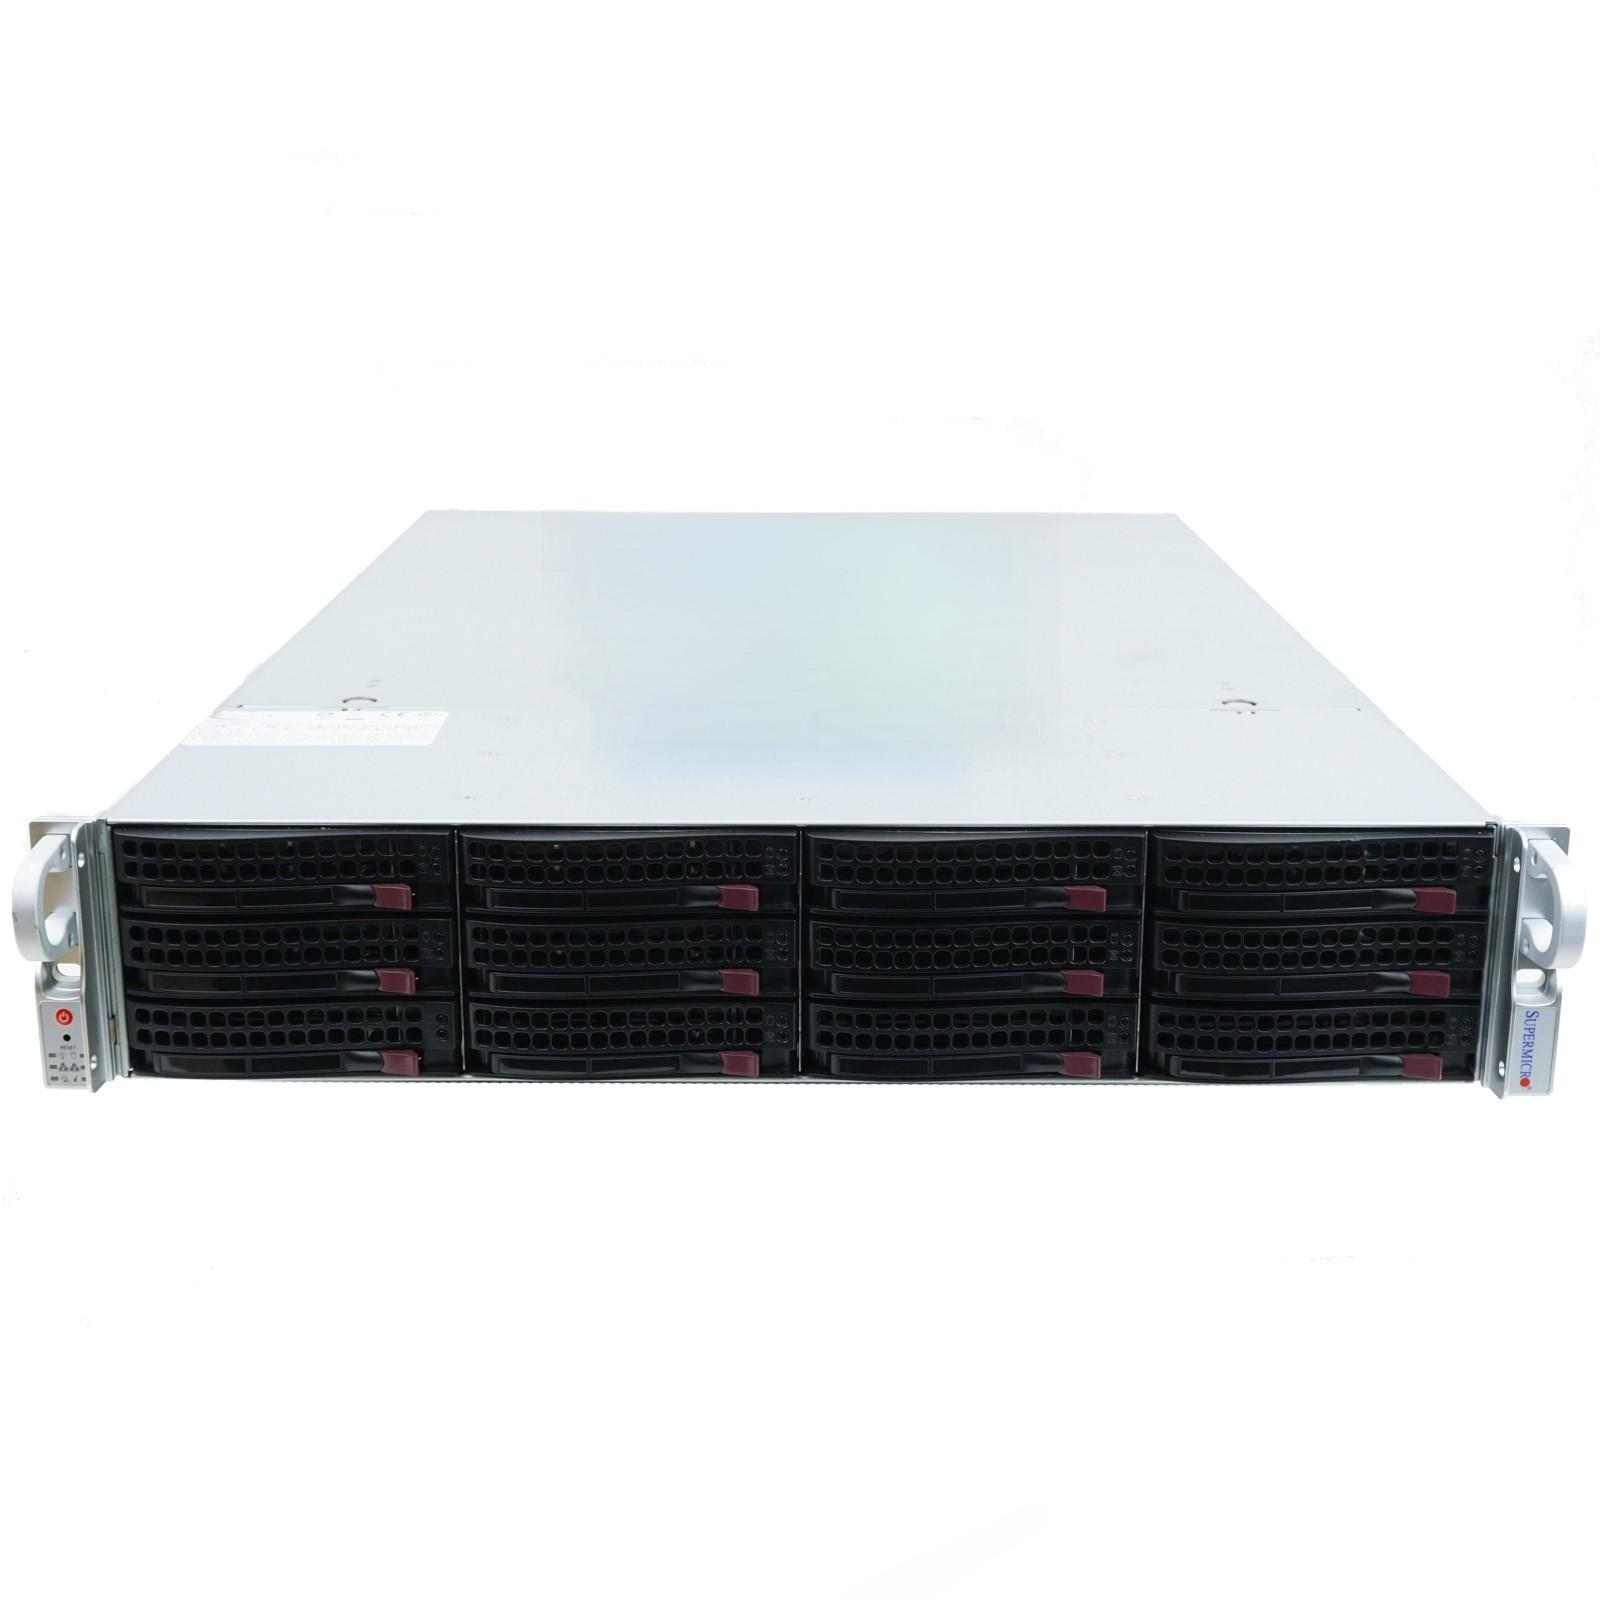 SuperMicro CSE-826 X11DPH-T 2U Rack Server